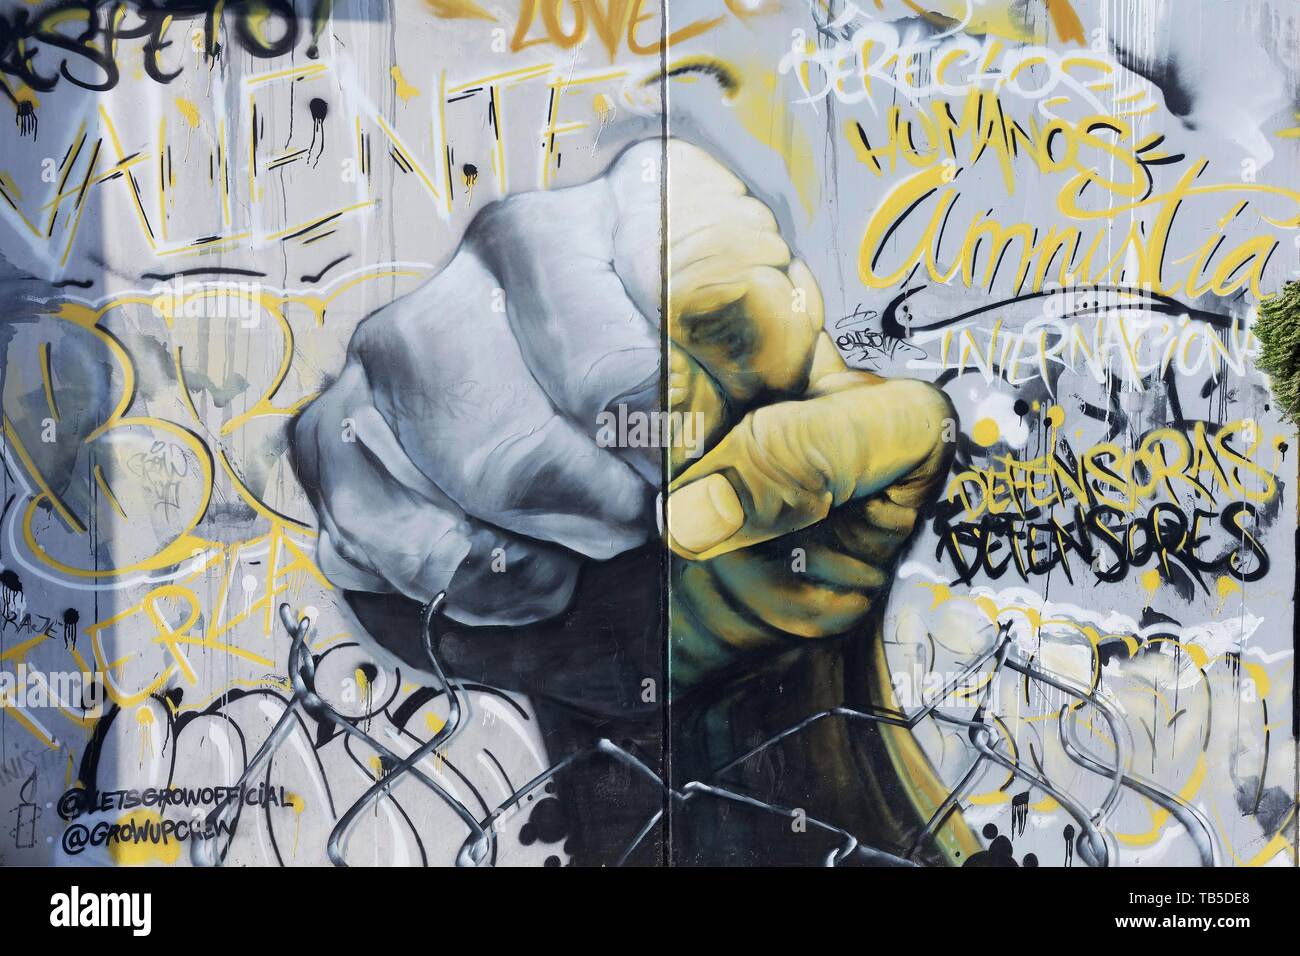 Graffiti, geballte Faust, Protest, Widerstand, Wandbild, Street Art, Altstadt El Carme, Valencia, Spanien Stockfoto